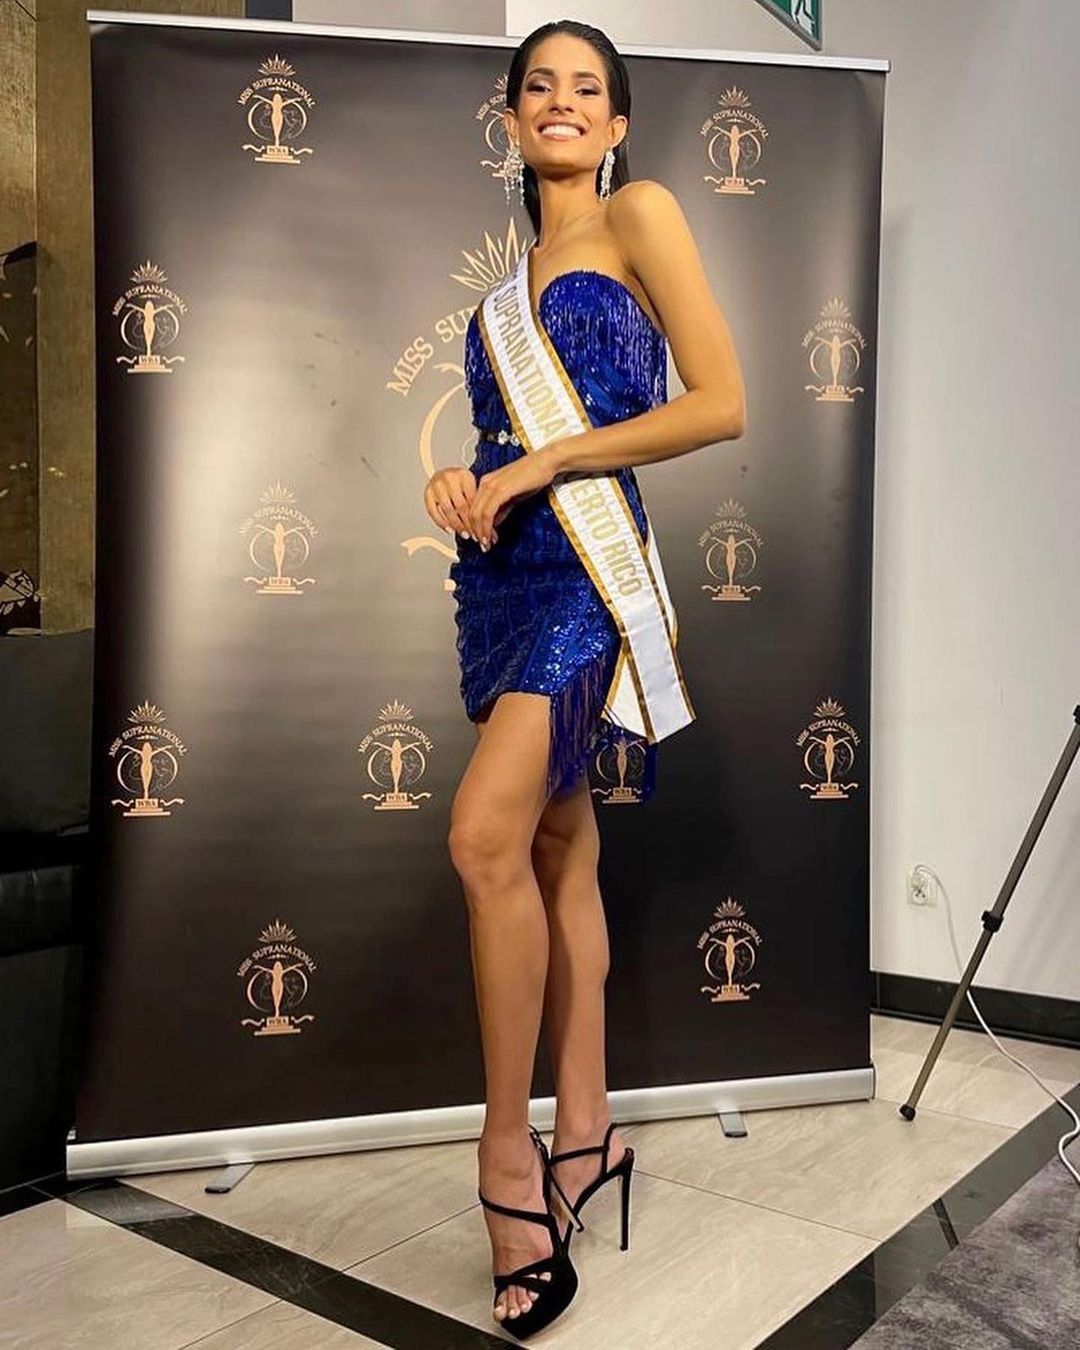 karla guilfu, top 5 de miss universe 2023/1st runner-up de miss supranational 2021. - Página 3 22906820